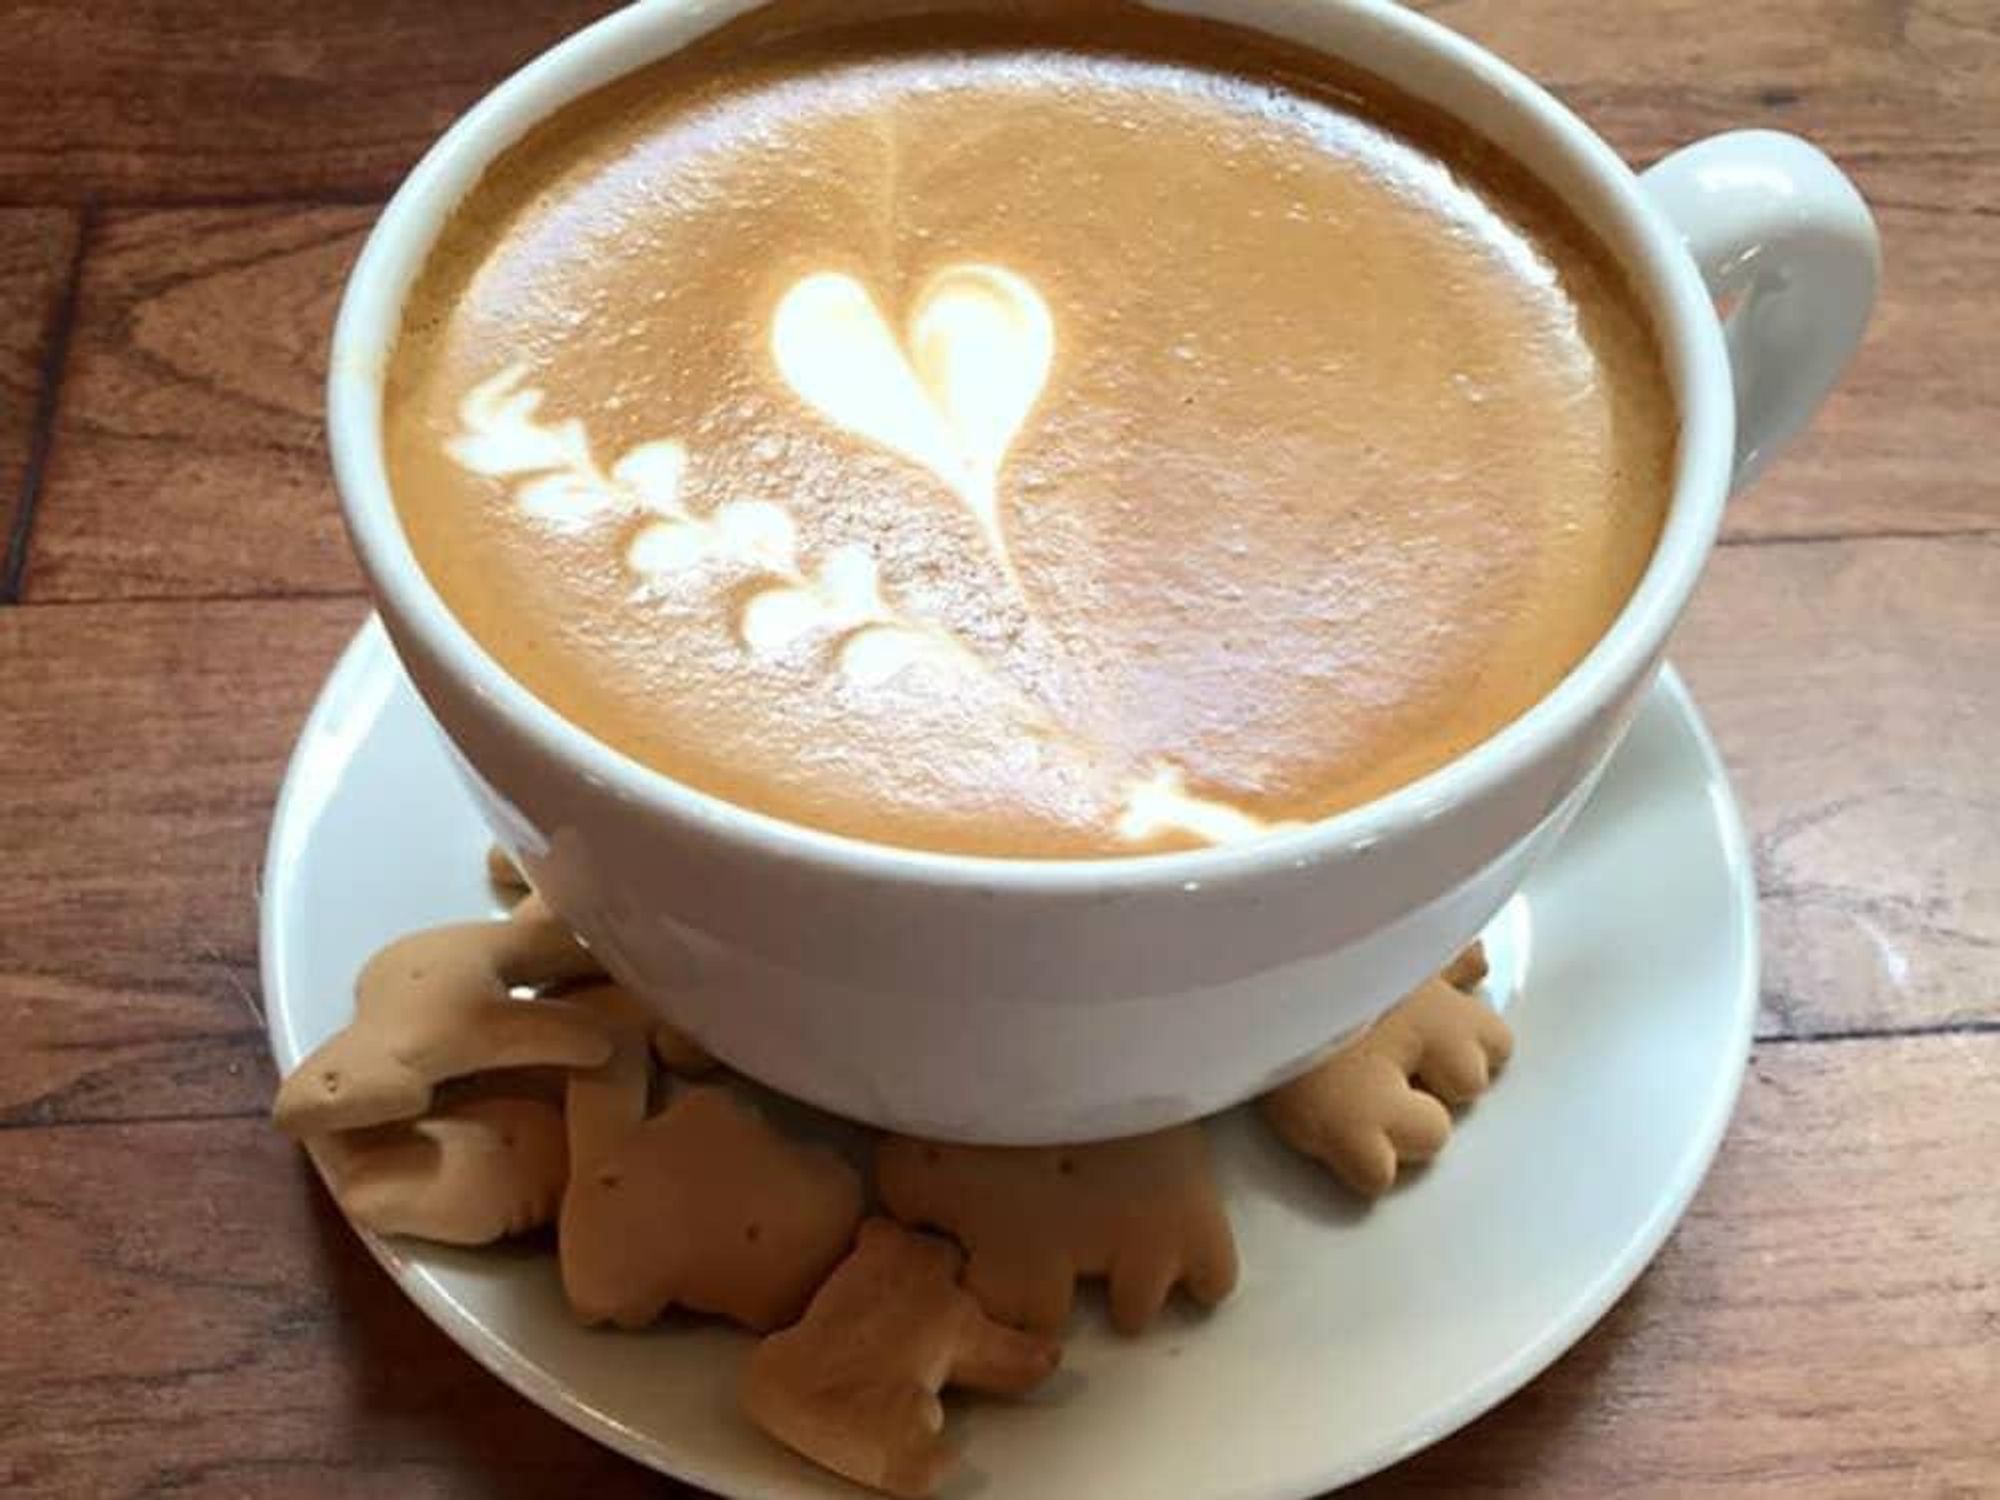 https://dallas.culturemap.com/media-library/halcyon-san-antonio-southtown-coffee-latte-art-cappuccino.jpg?id=31624476&width=2000&height=1500&quality=85&coordinates=0%2C0%2C0%2C0